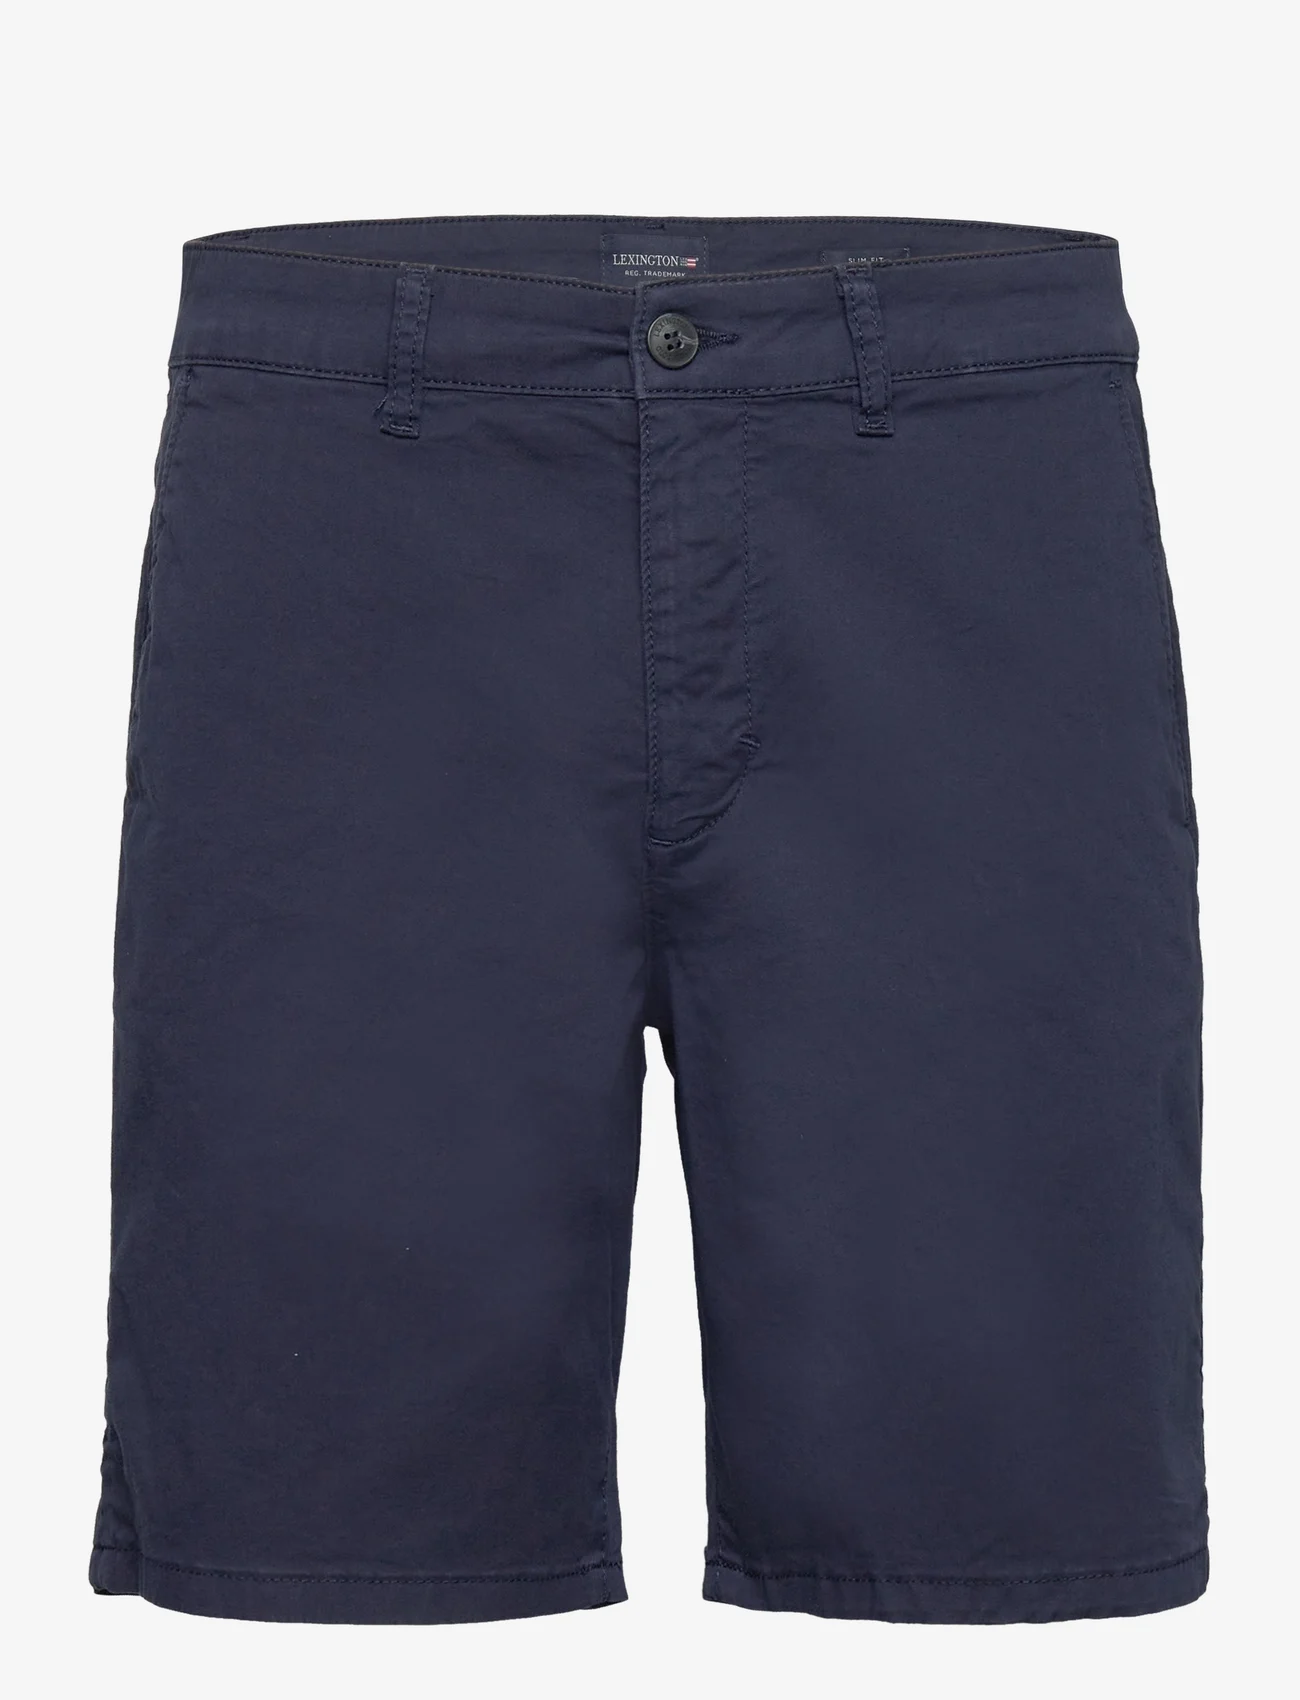 Lexington Clothing - Gavin Cotton Shorts - chinos shorts - dark blue - 0